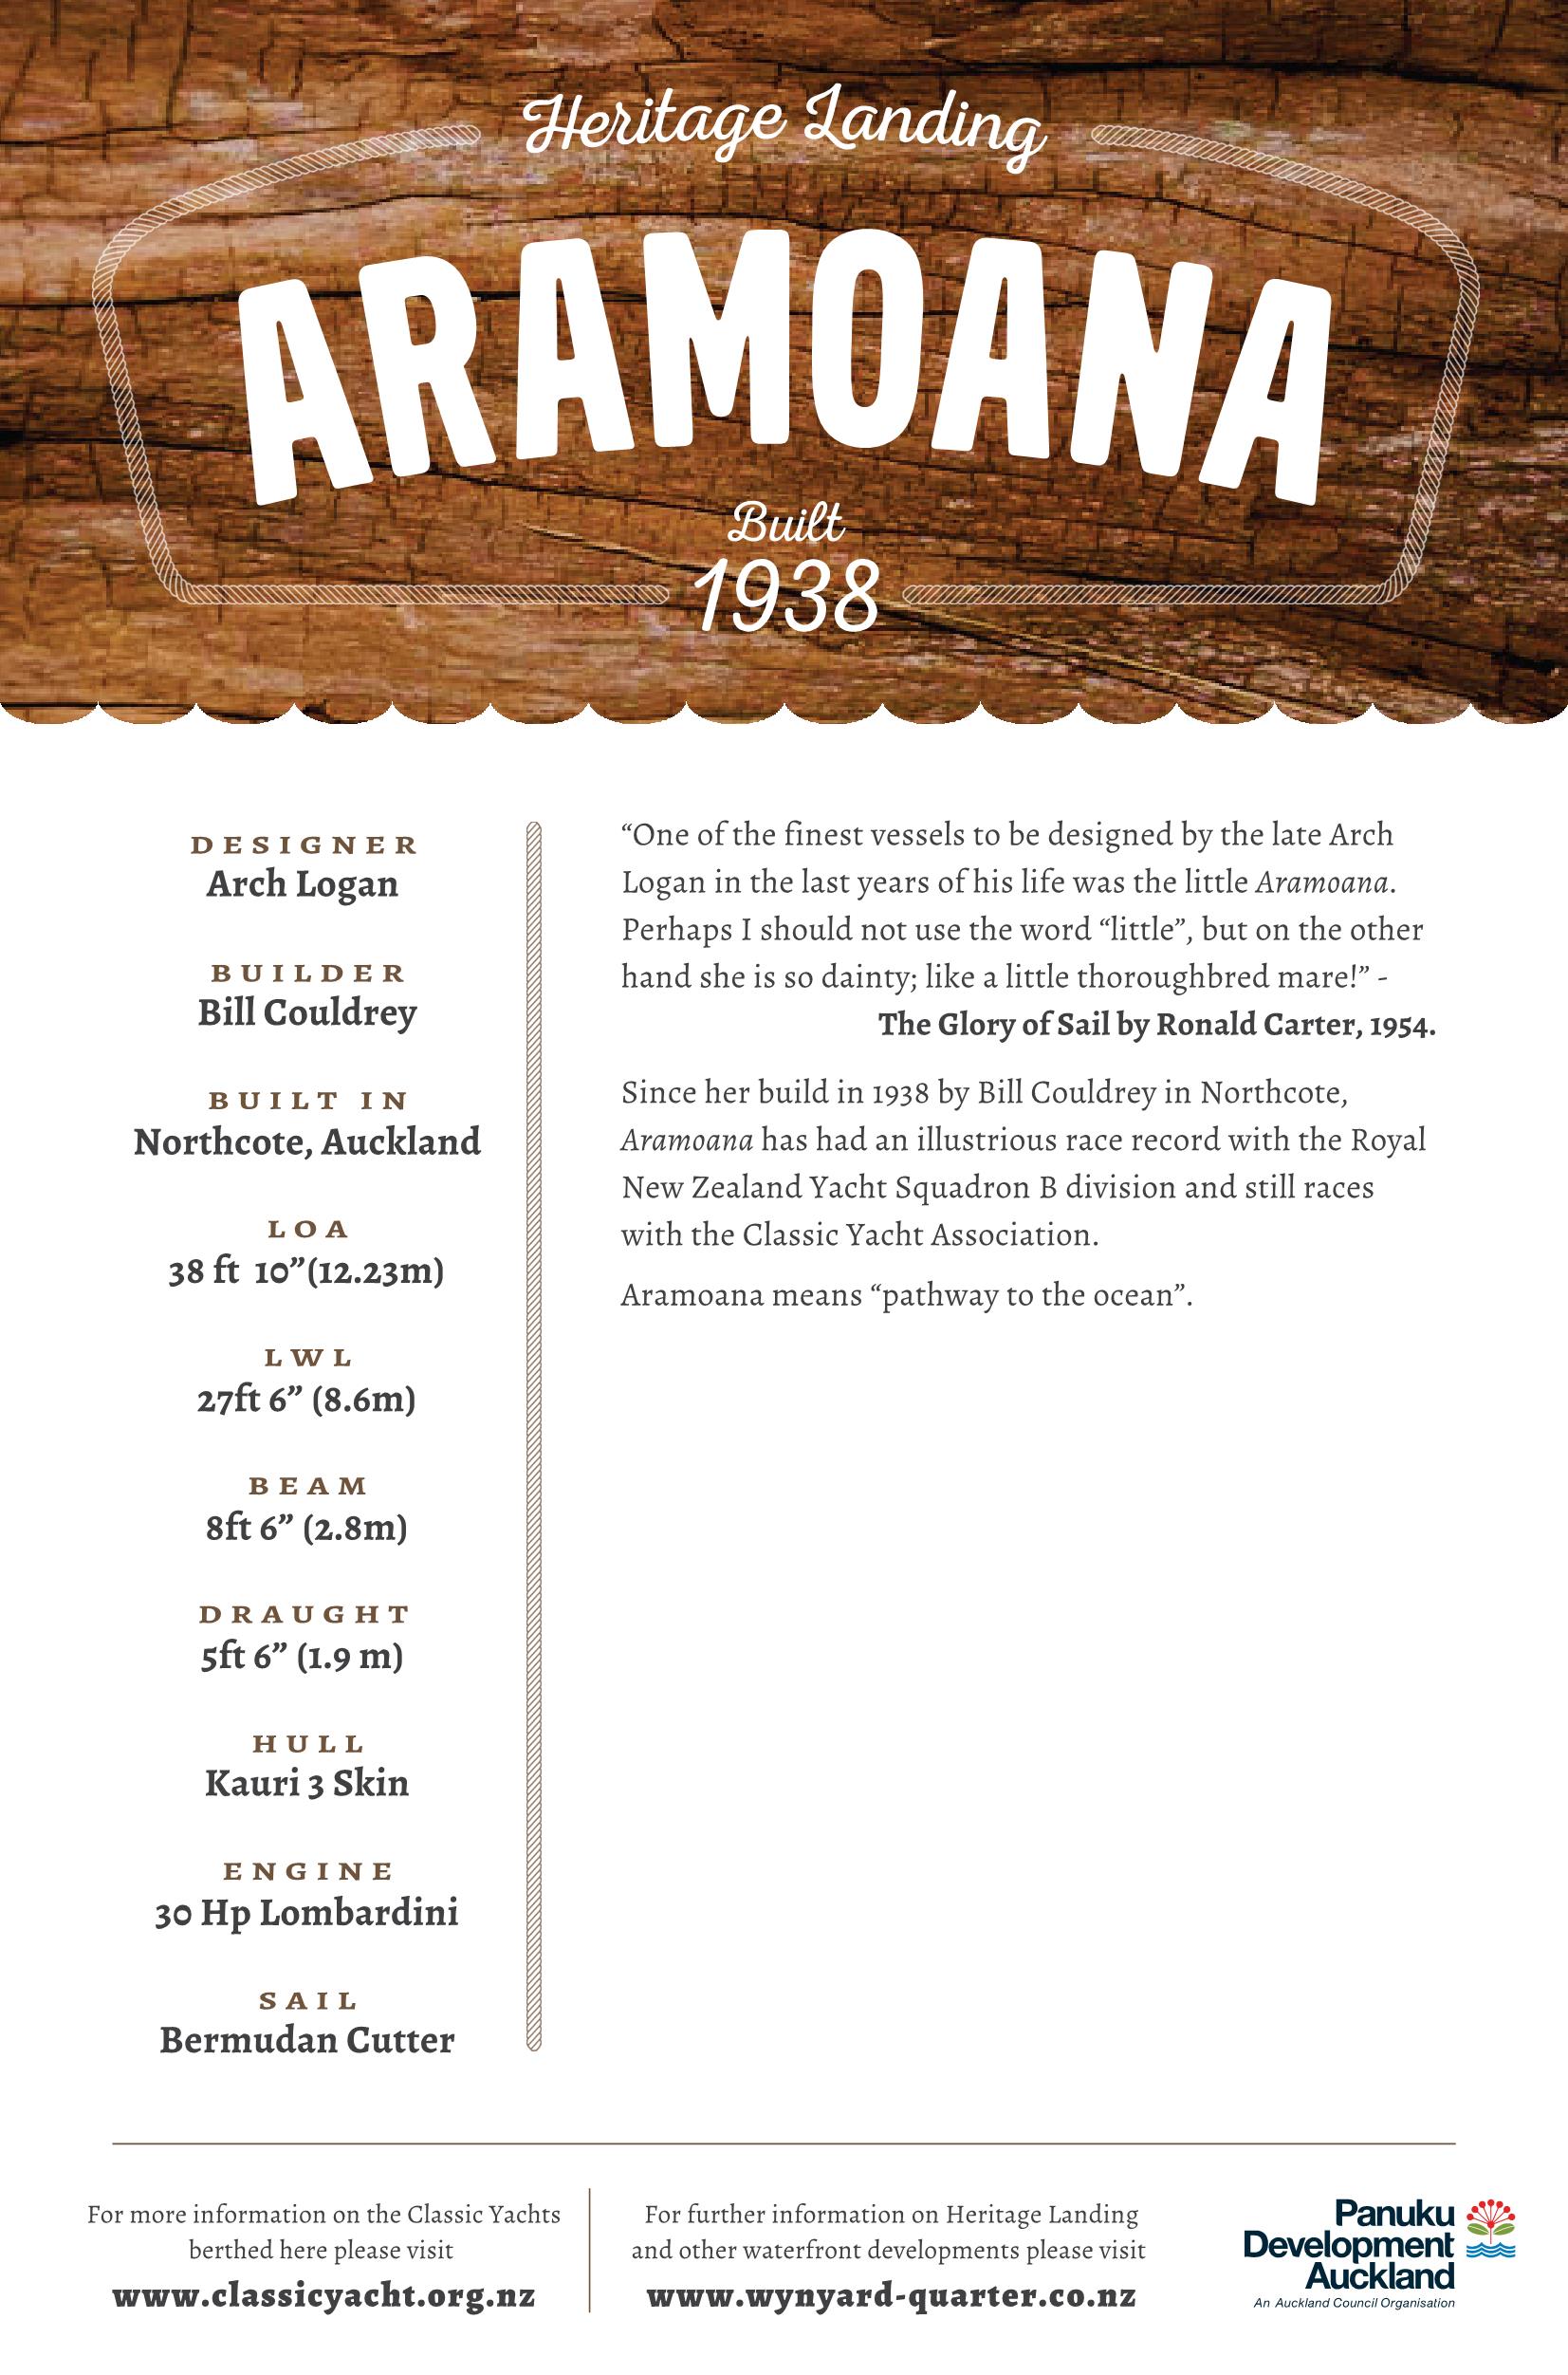 Aramoana Bermudan Cutter Details